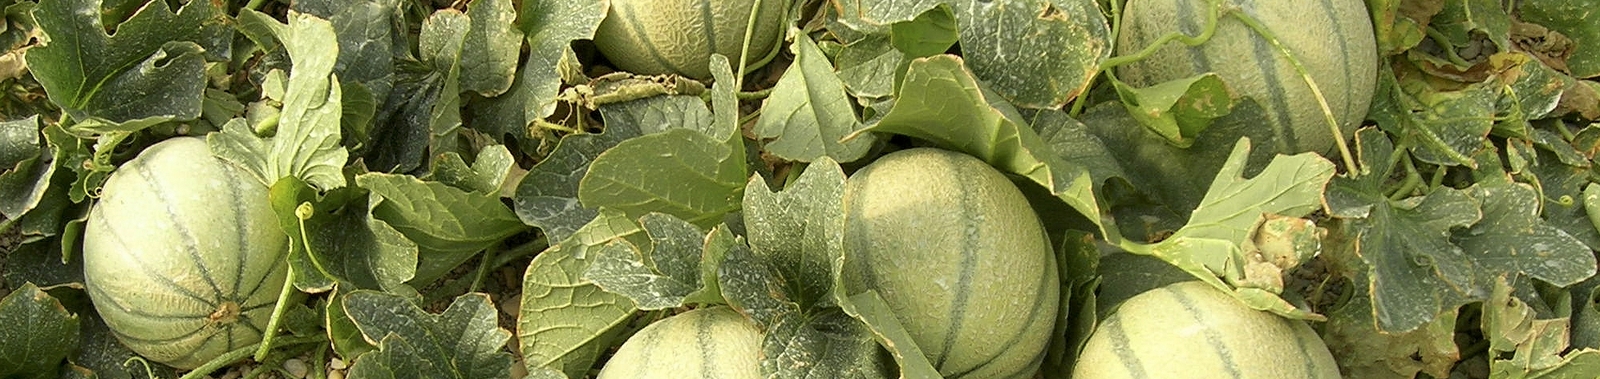 Melon Market Requirements